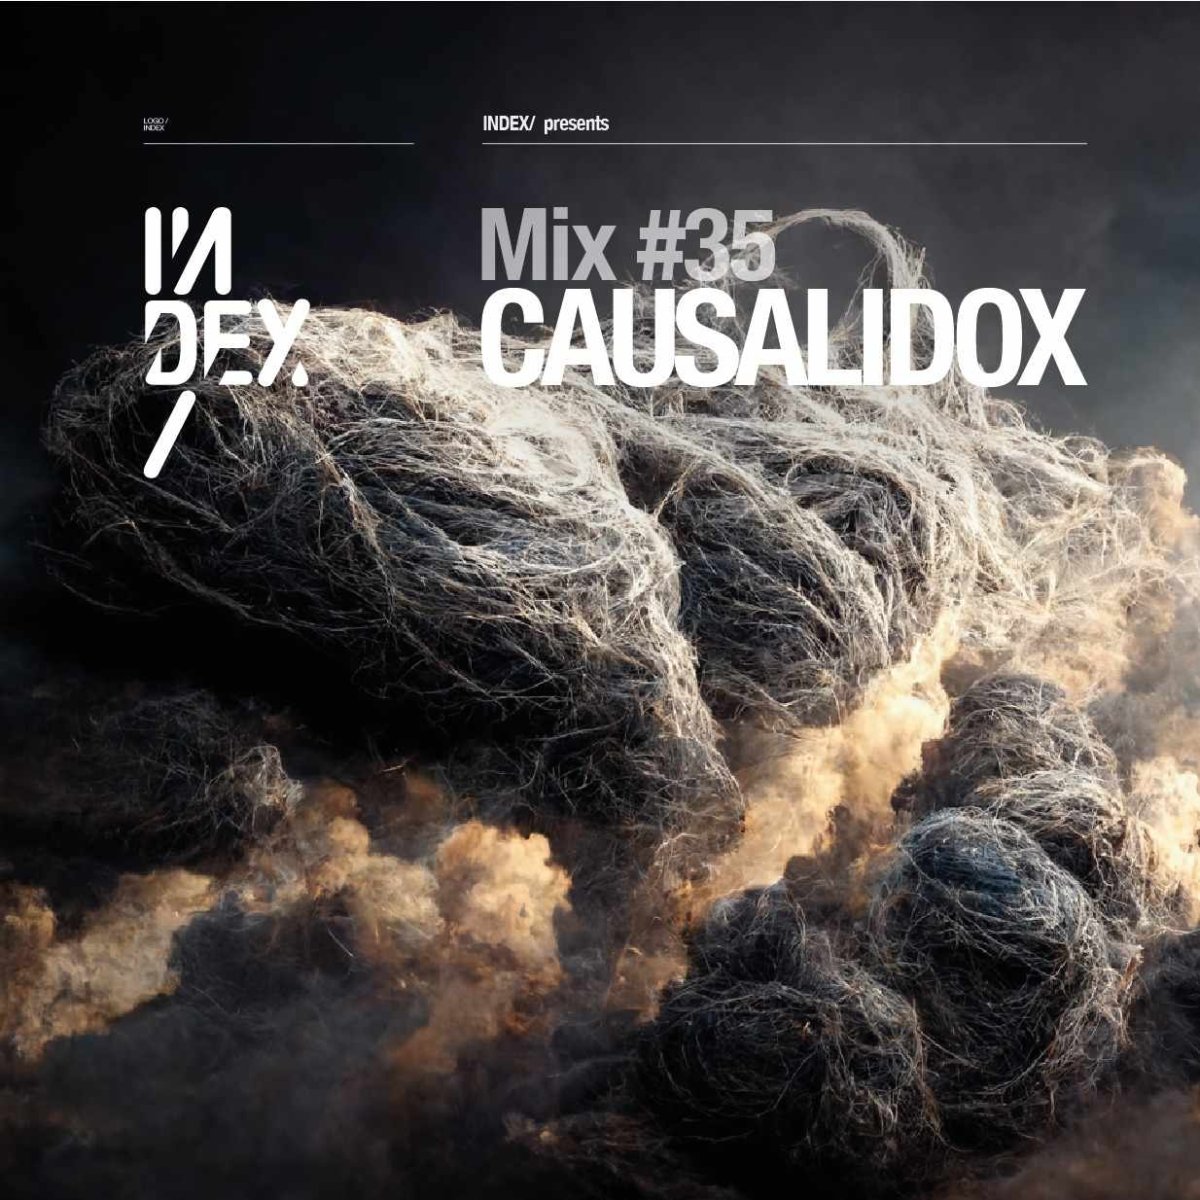 iNDEX CausaliDox set.jpg